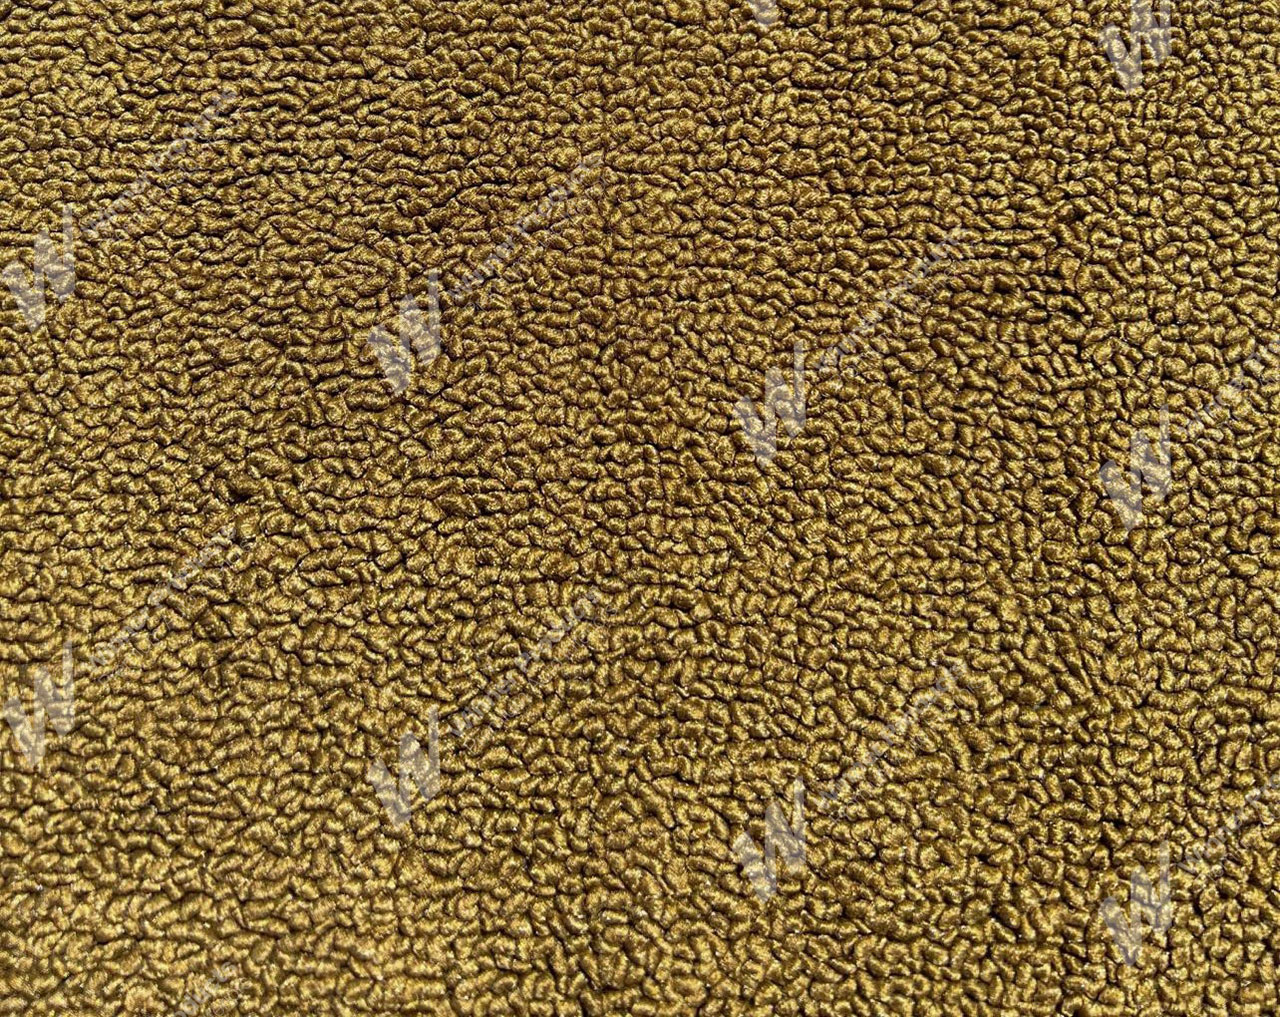 Holden Kingswood HT Kingswood Sedan 11G Antique Gold & Castillion Weave Carpet (Image 1 of 1)